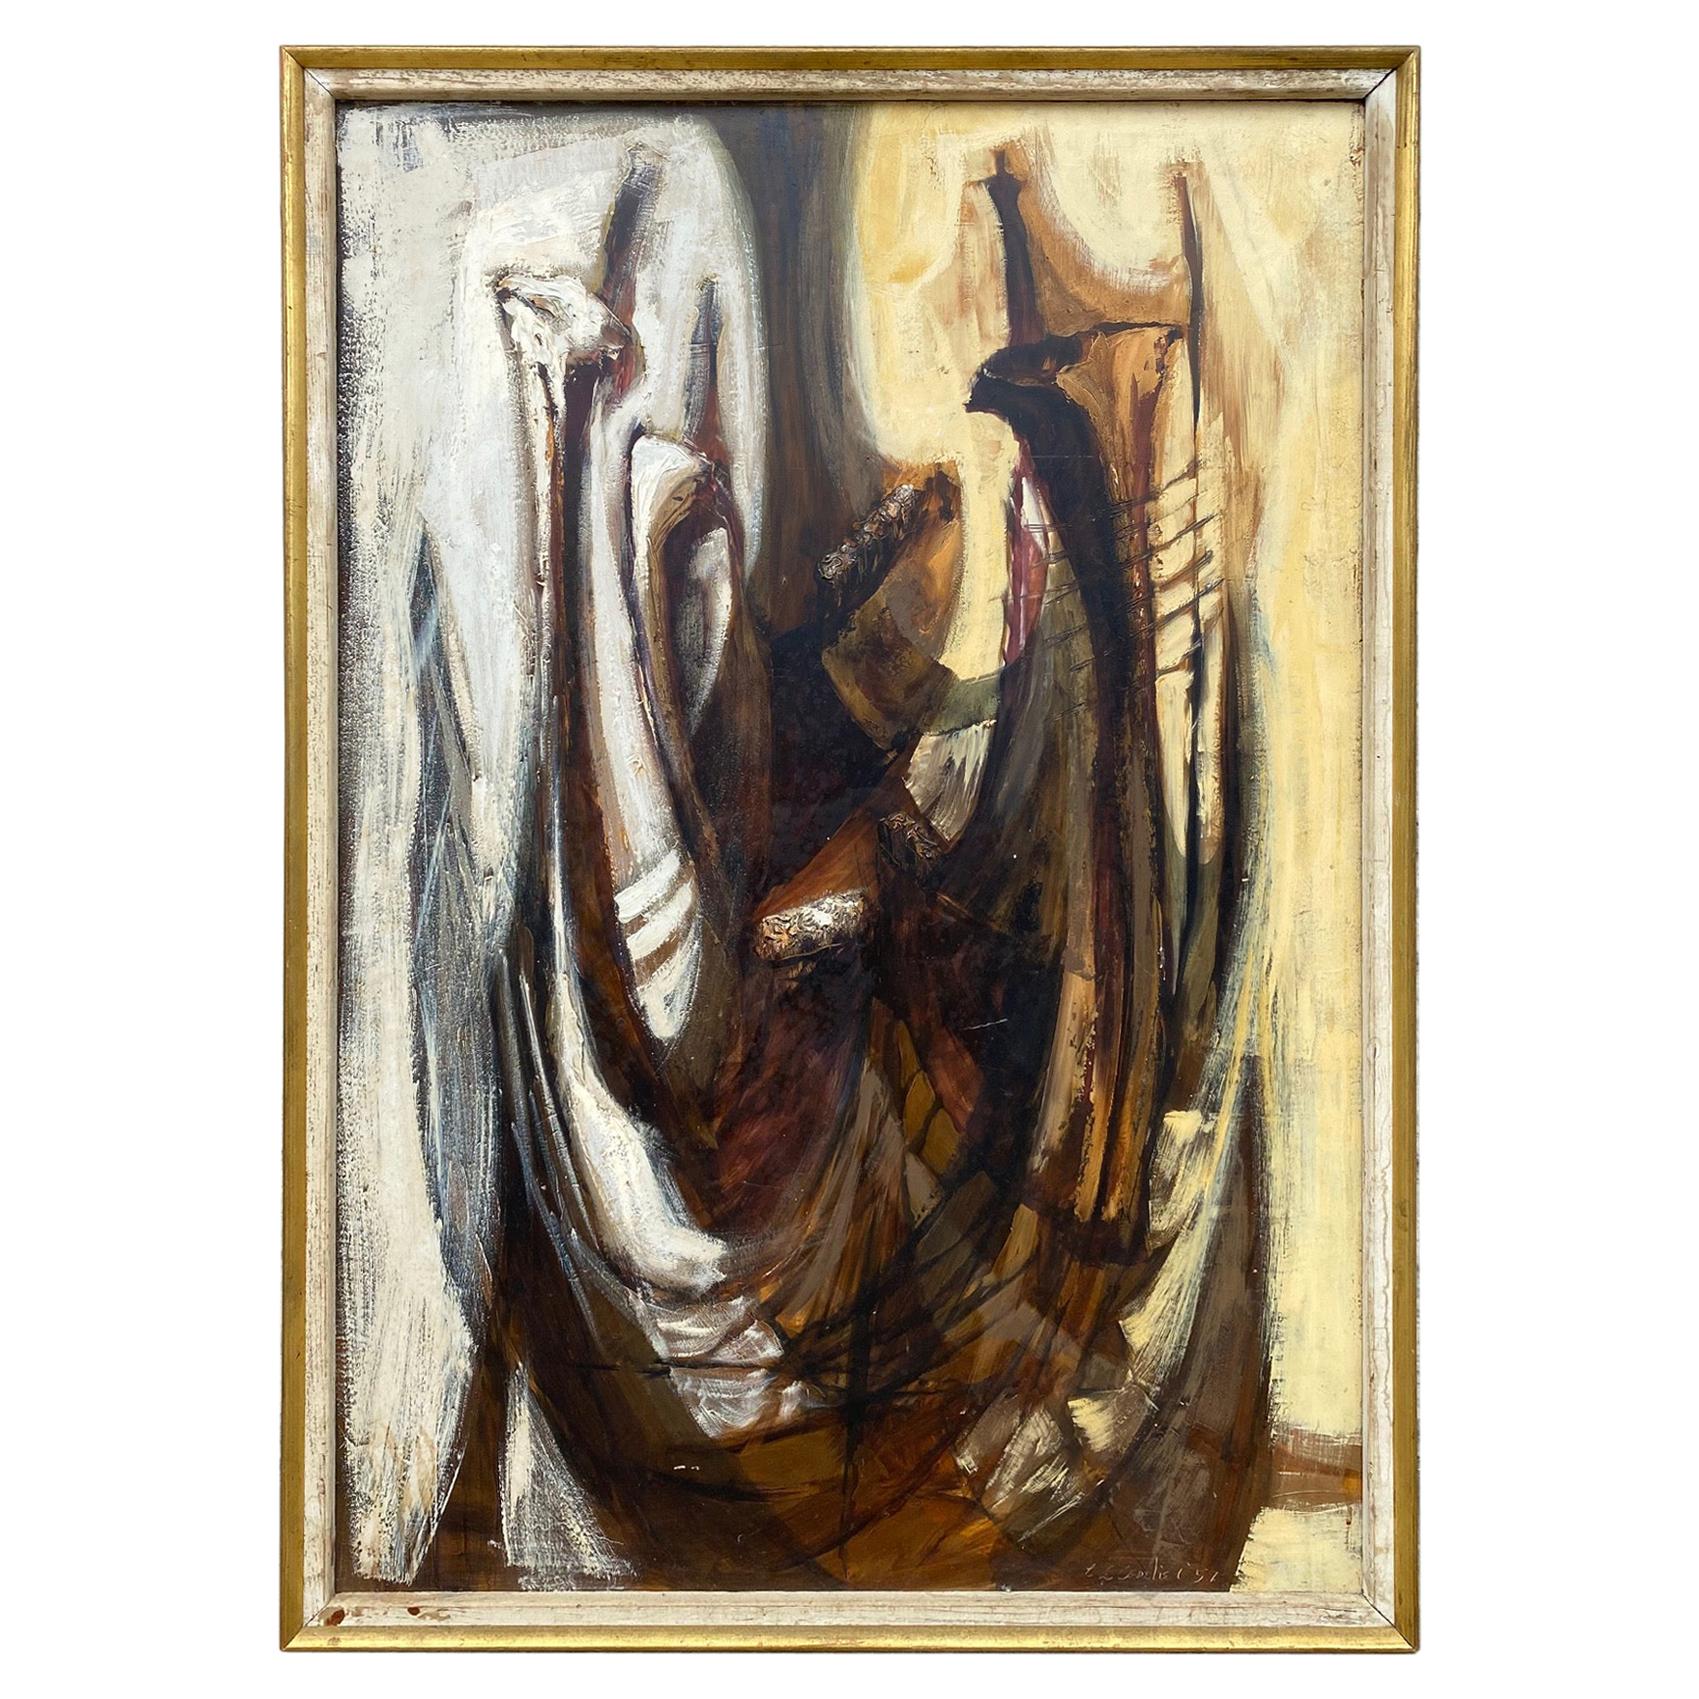 Texas Artist Cecil Casebier "Jawbone" 1957 Abstract Oil on Board 